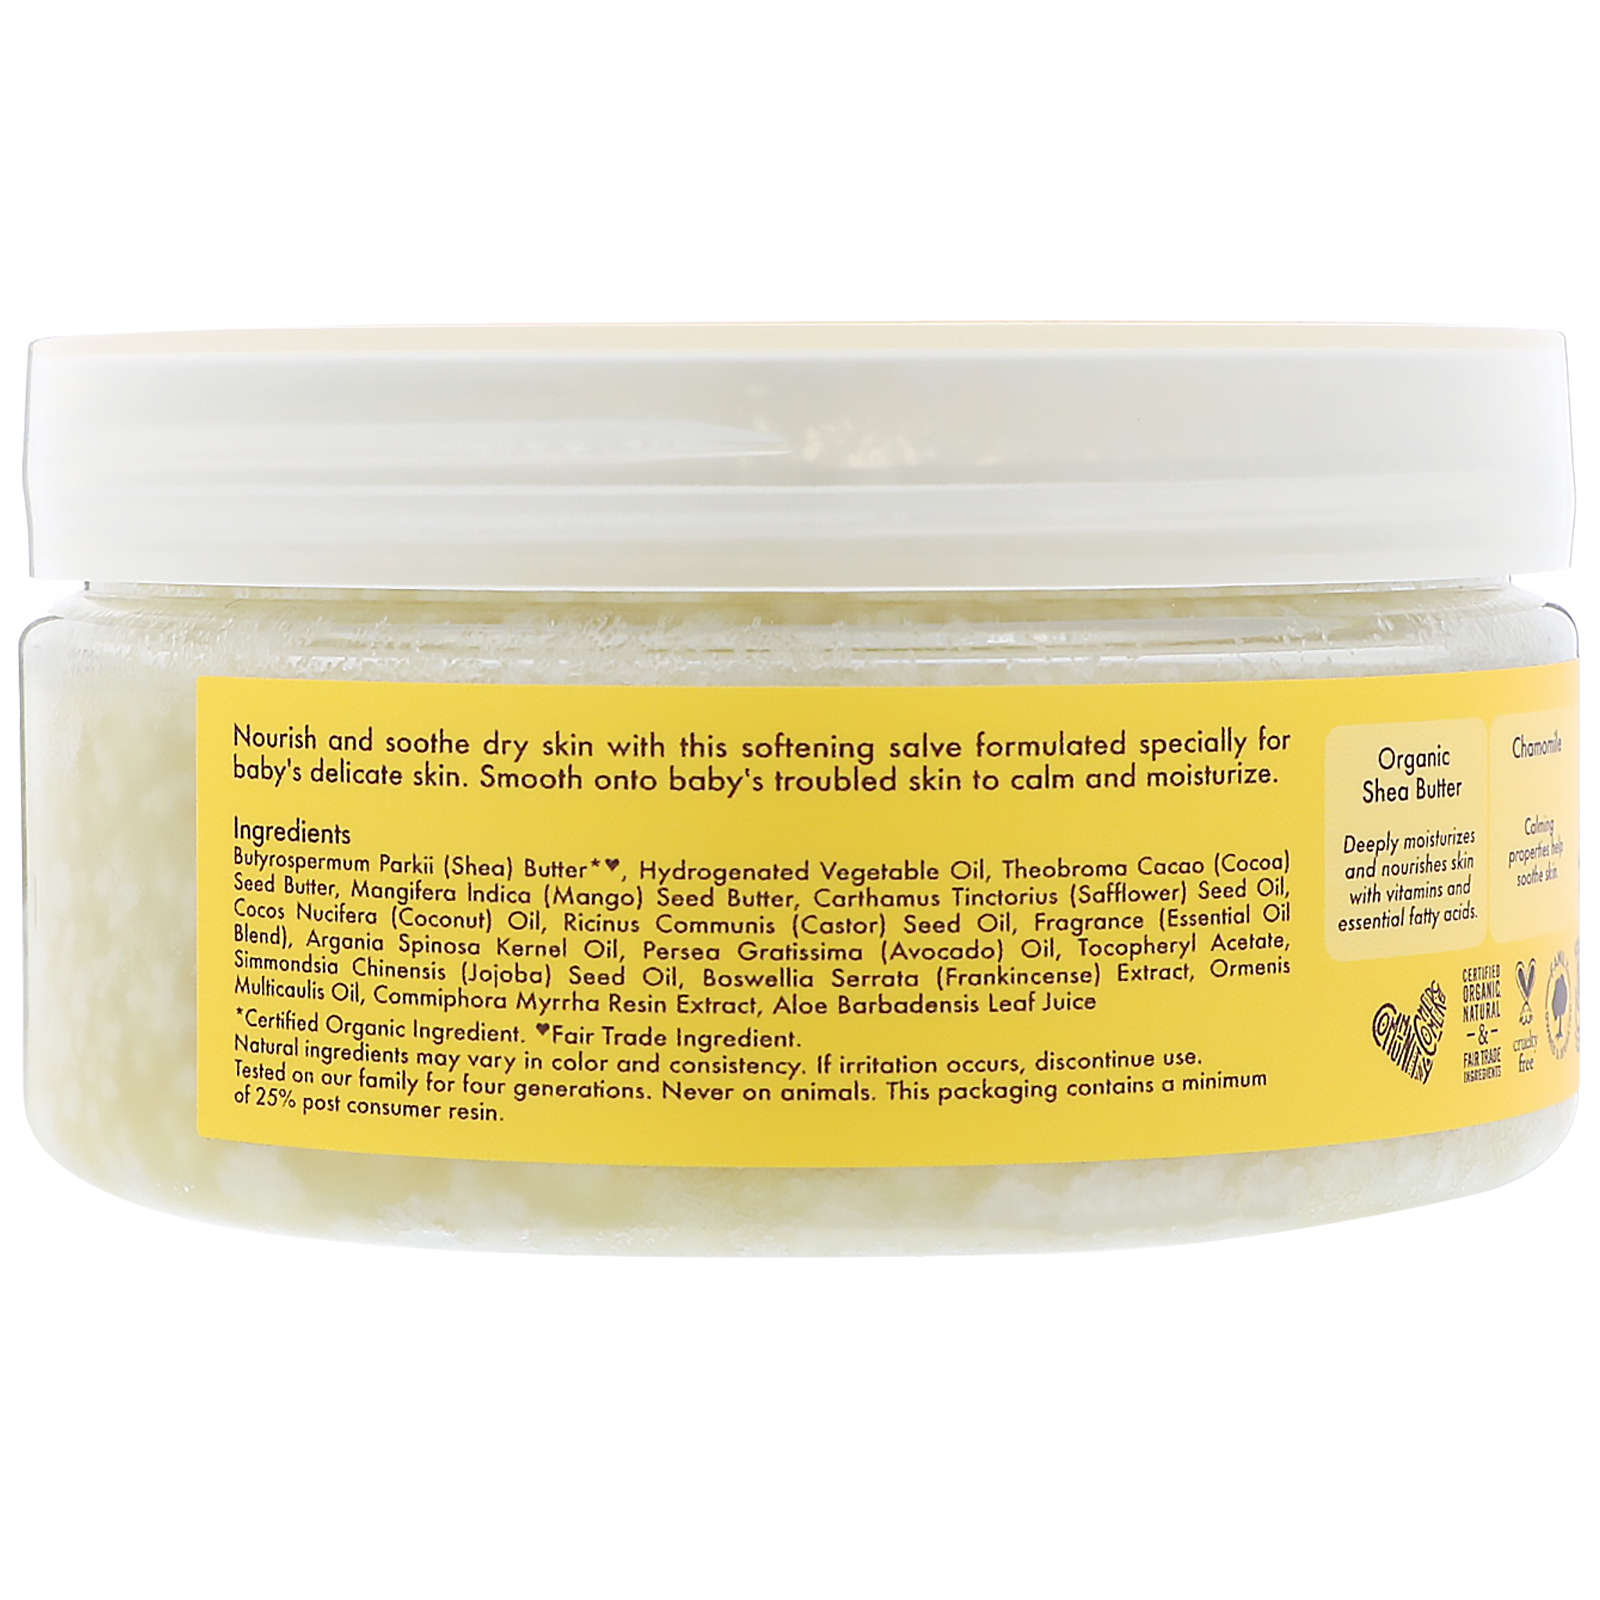 shea moisture raw shea chamomile & argan oil baby therapy